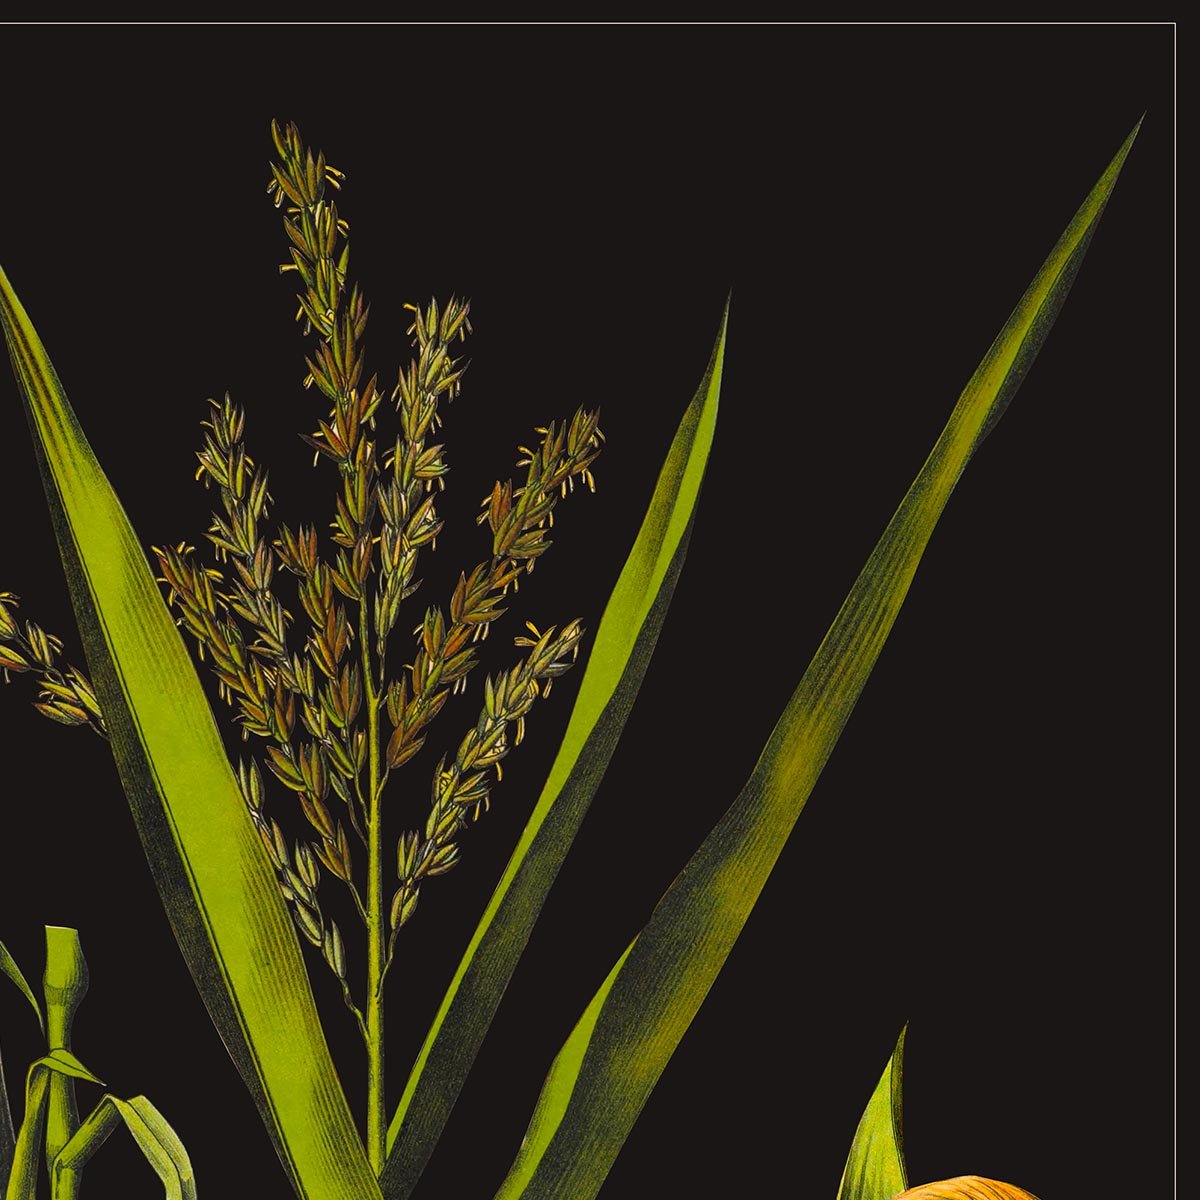 Corn Botanical Poster